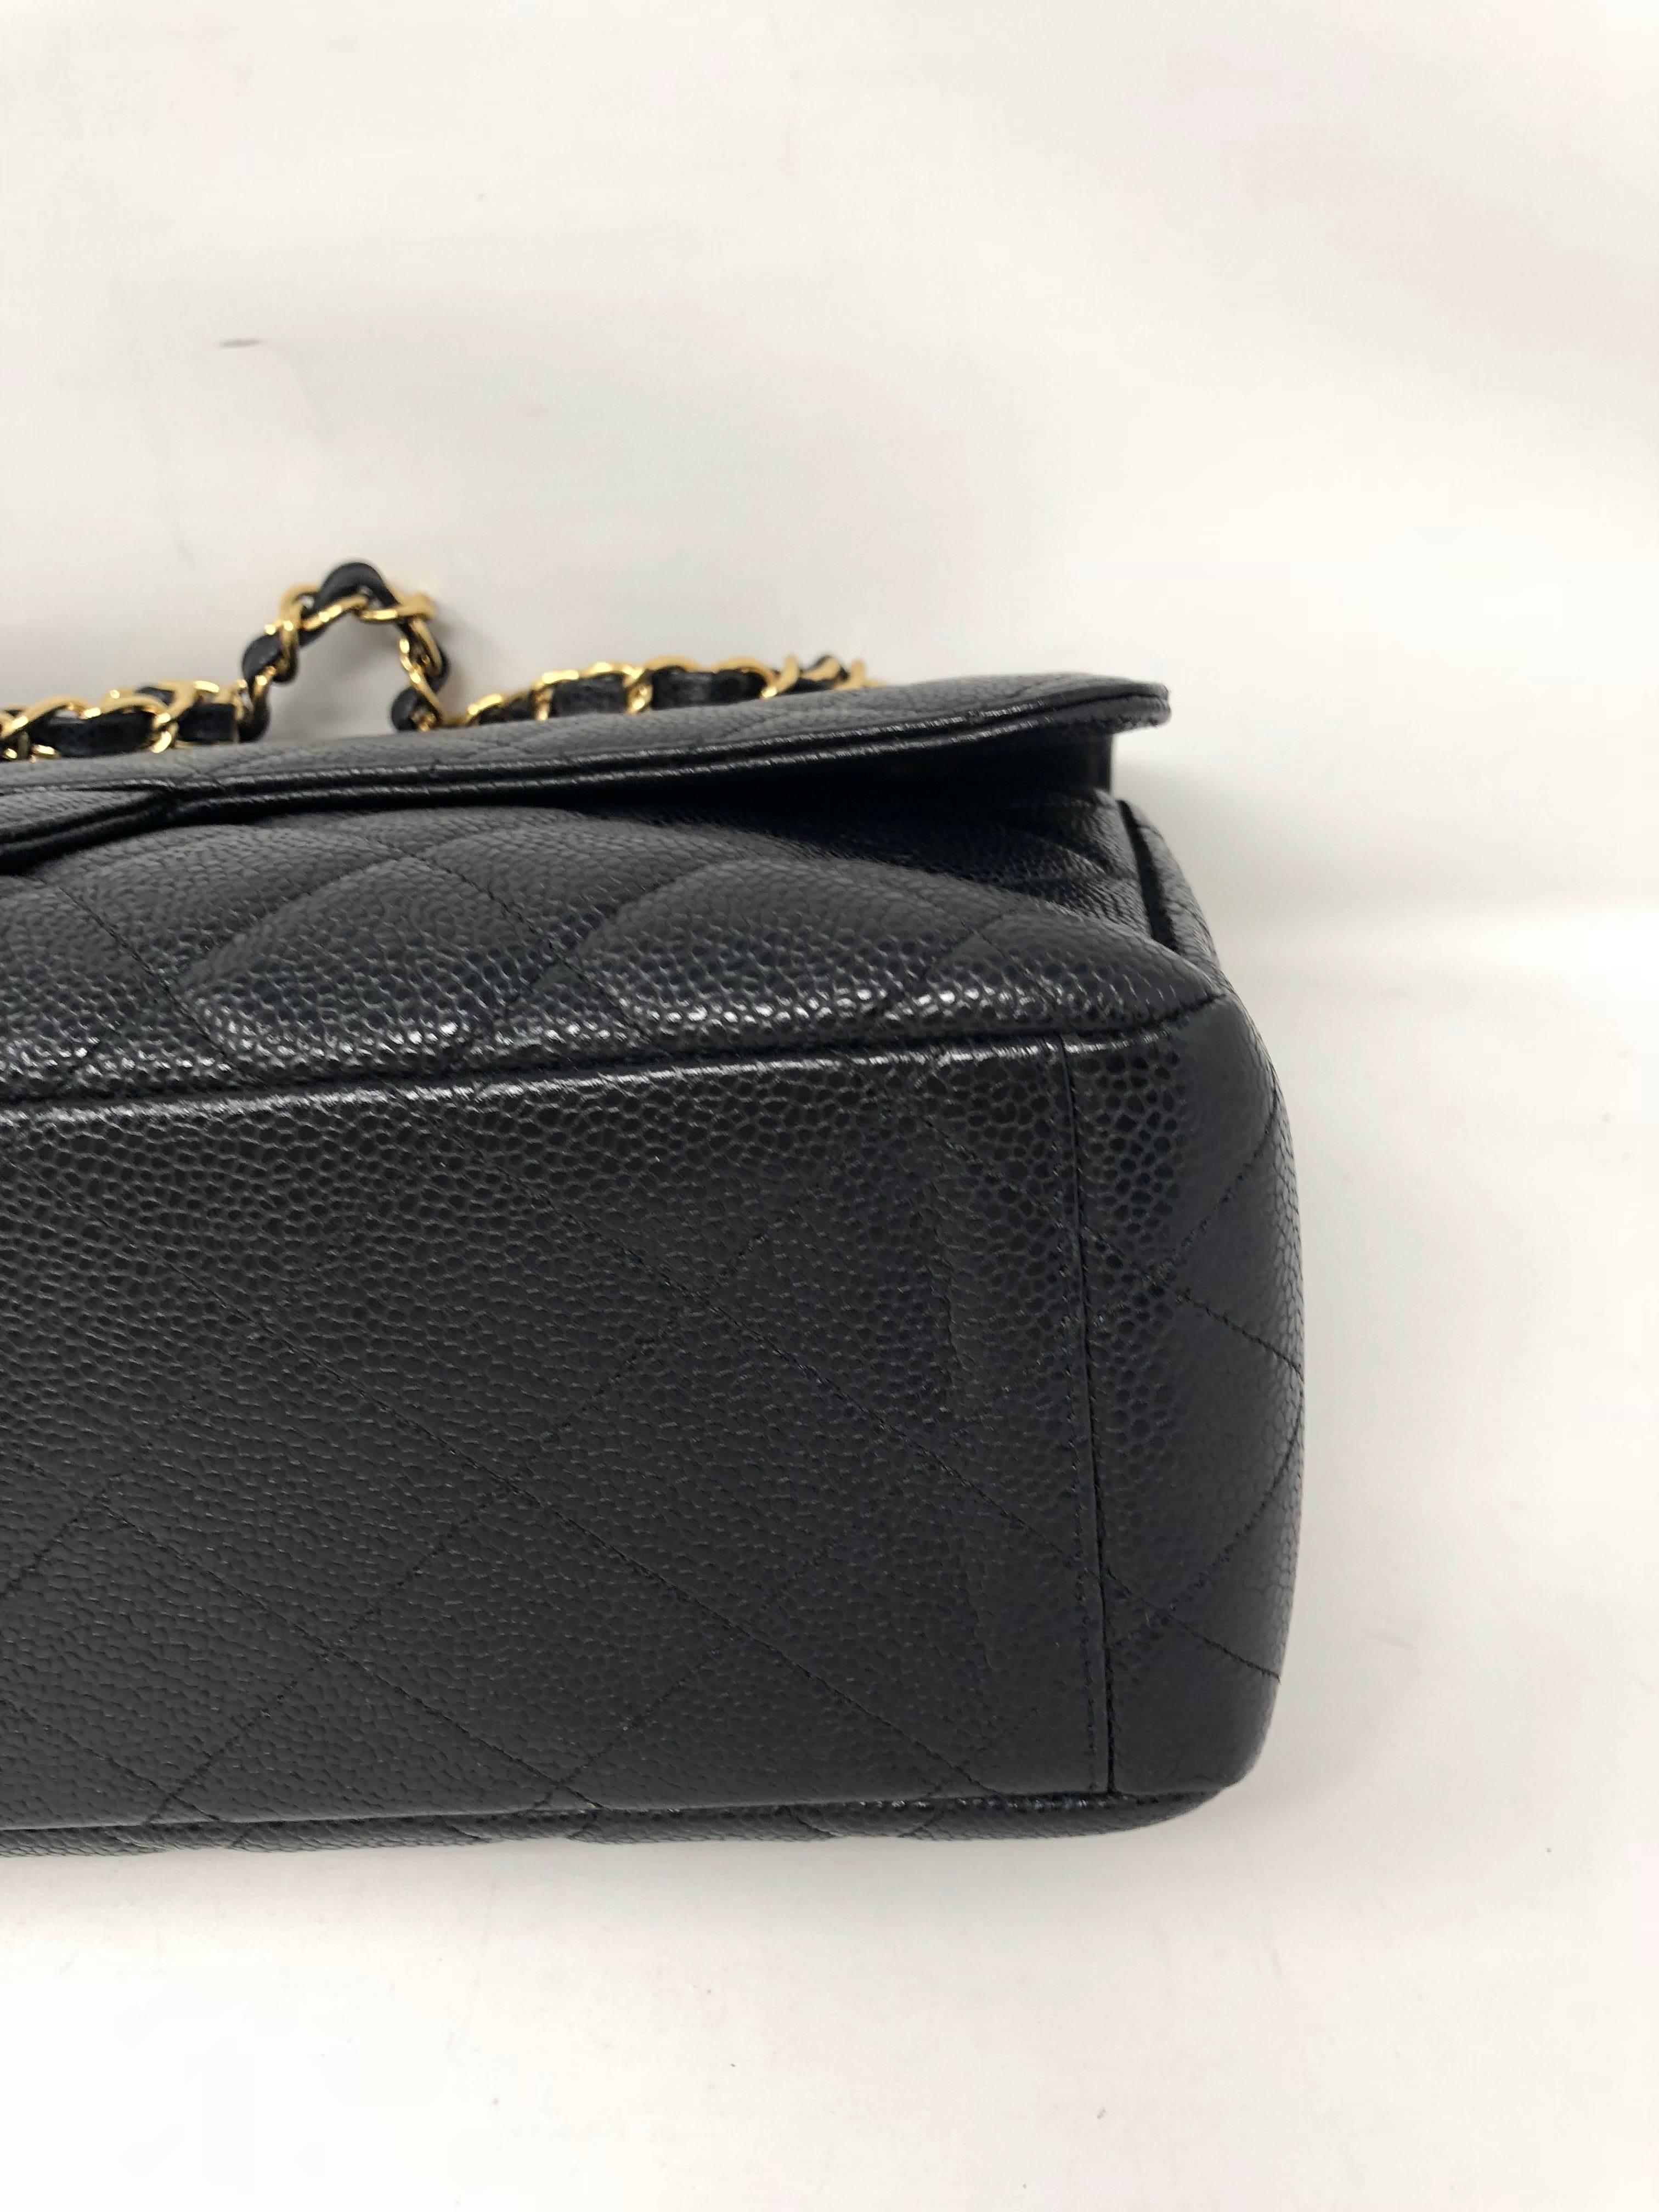 Women's or Men's Chanel Black Caviar Leather Maxi Bag 